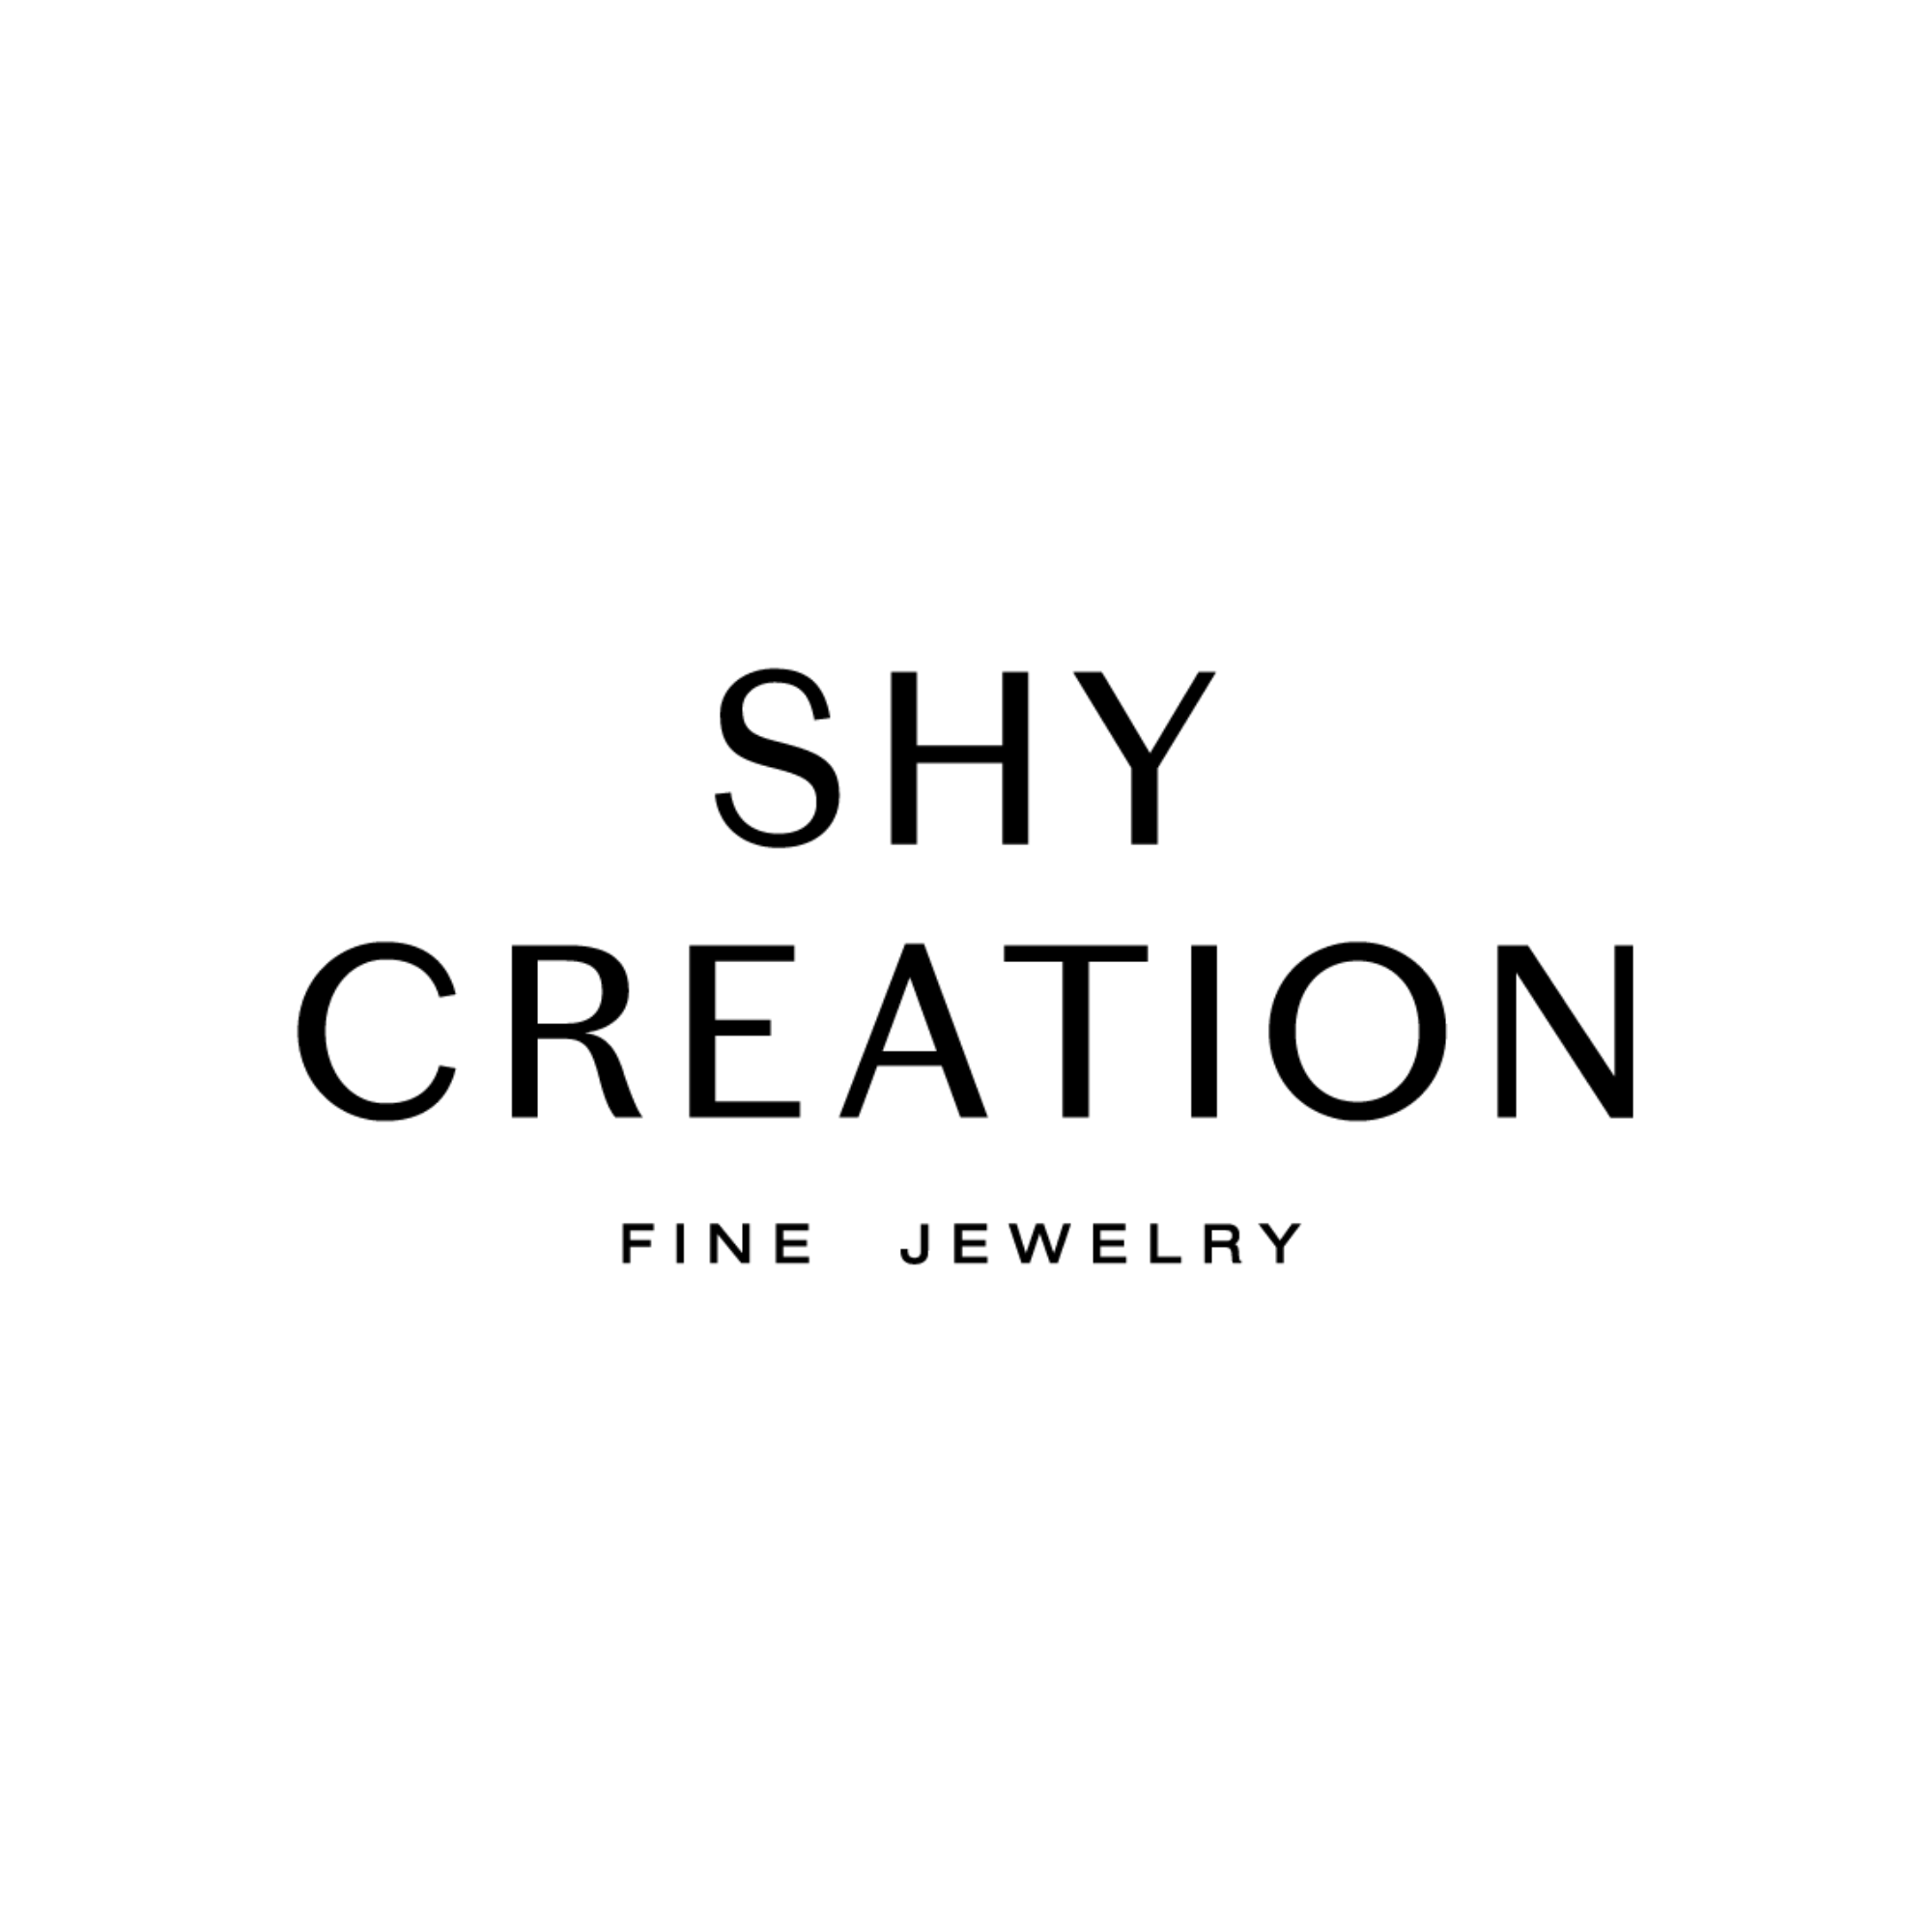 Shy Creation jewelry at Henne Jewelers